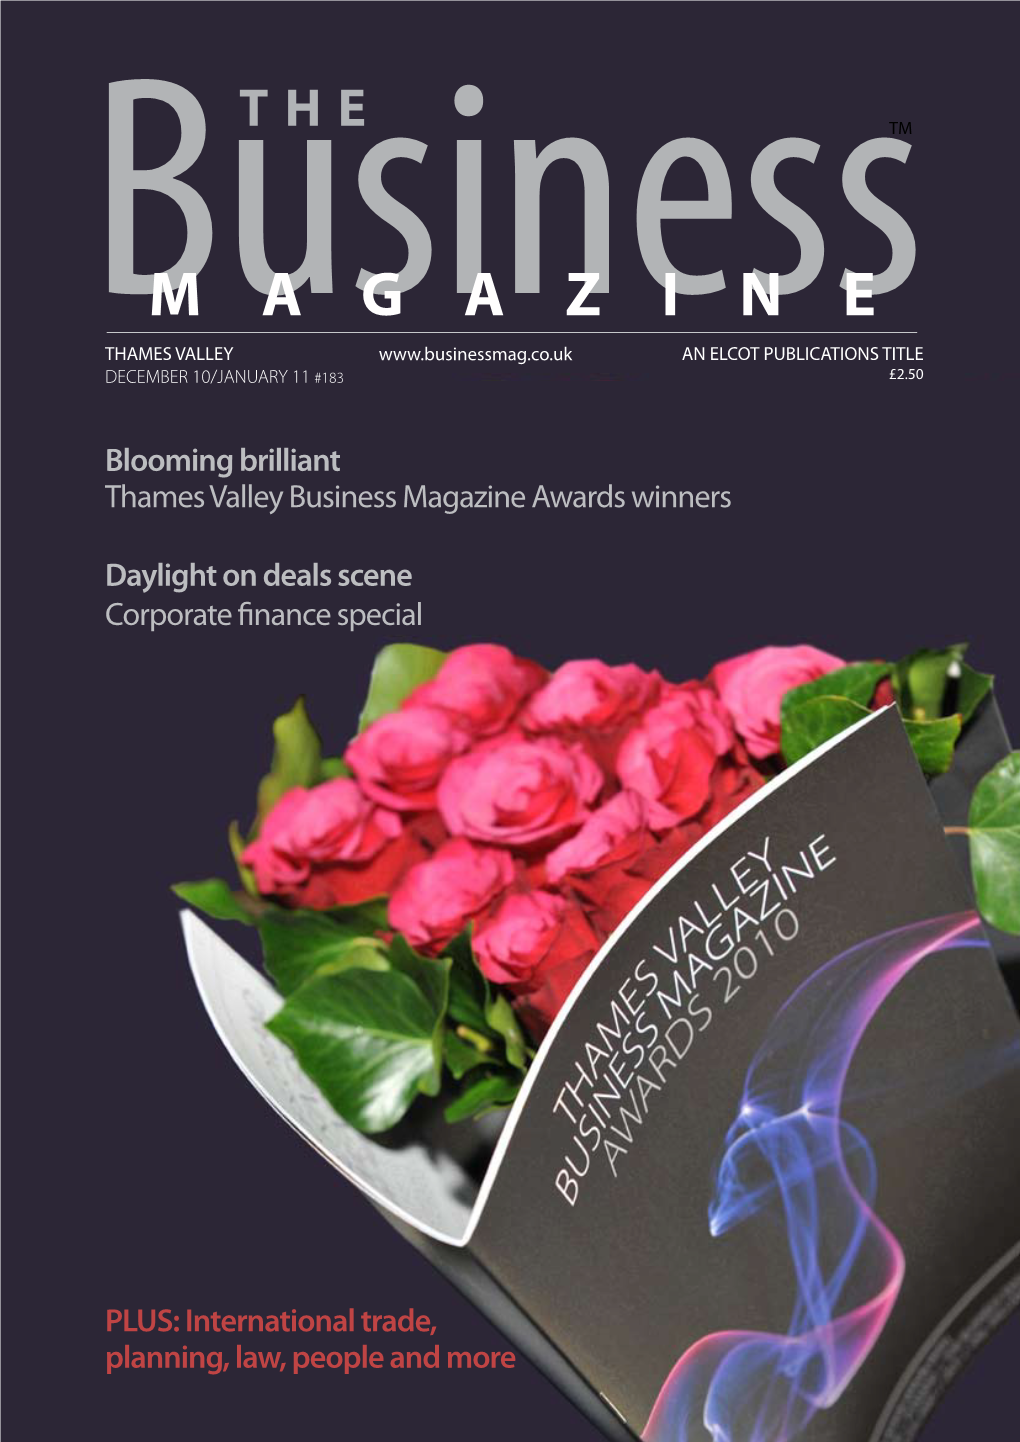 The Business Magazine